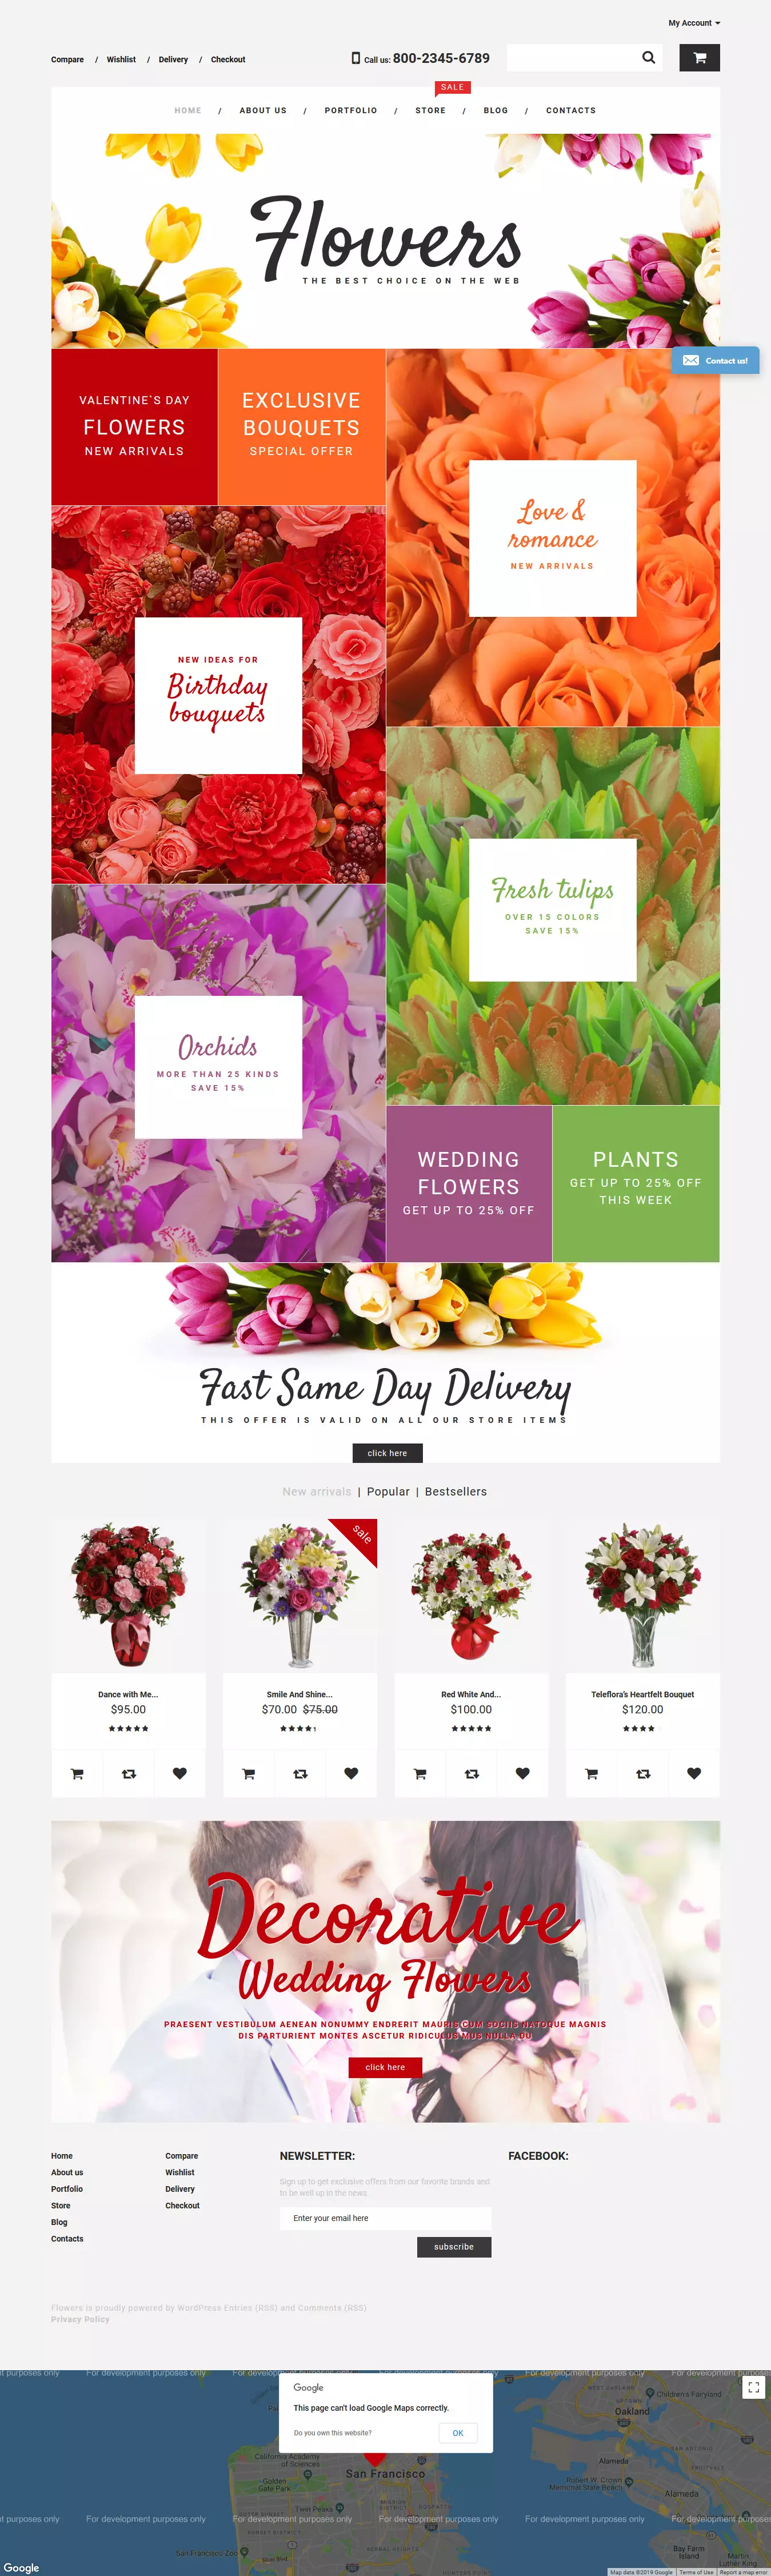 Flower Shop - Best Premium Florist and Floriculture WordPress Theme